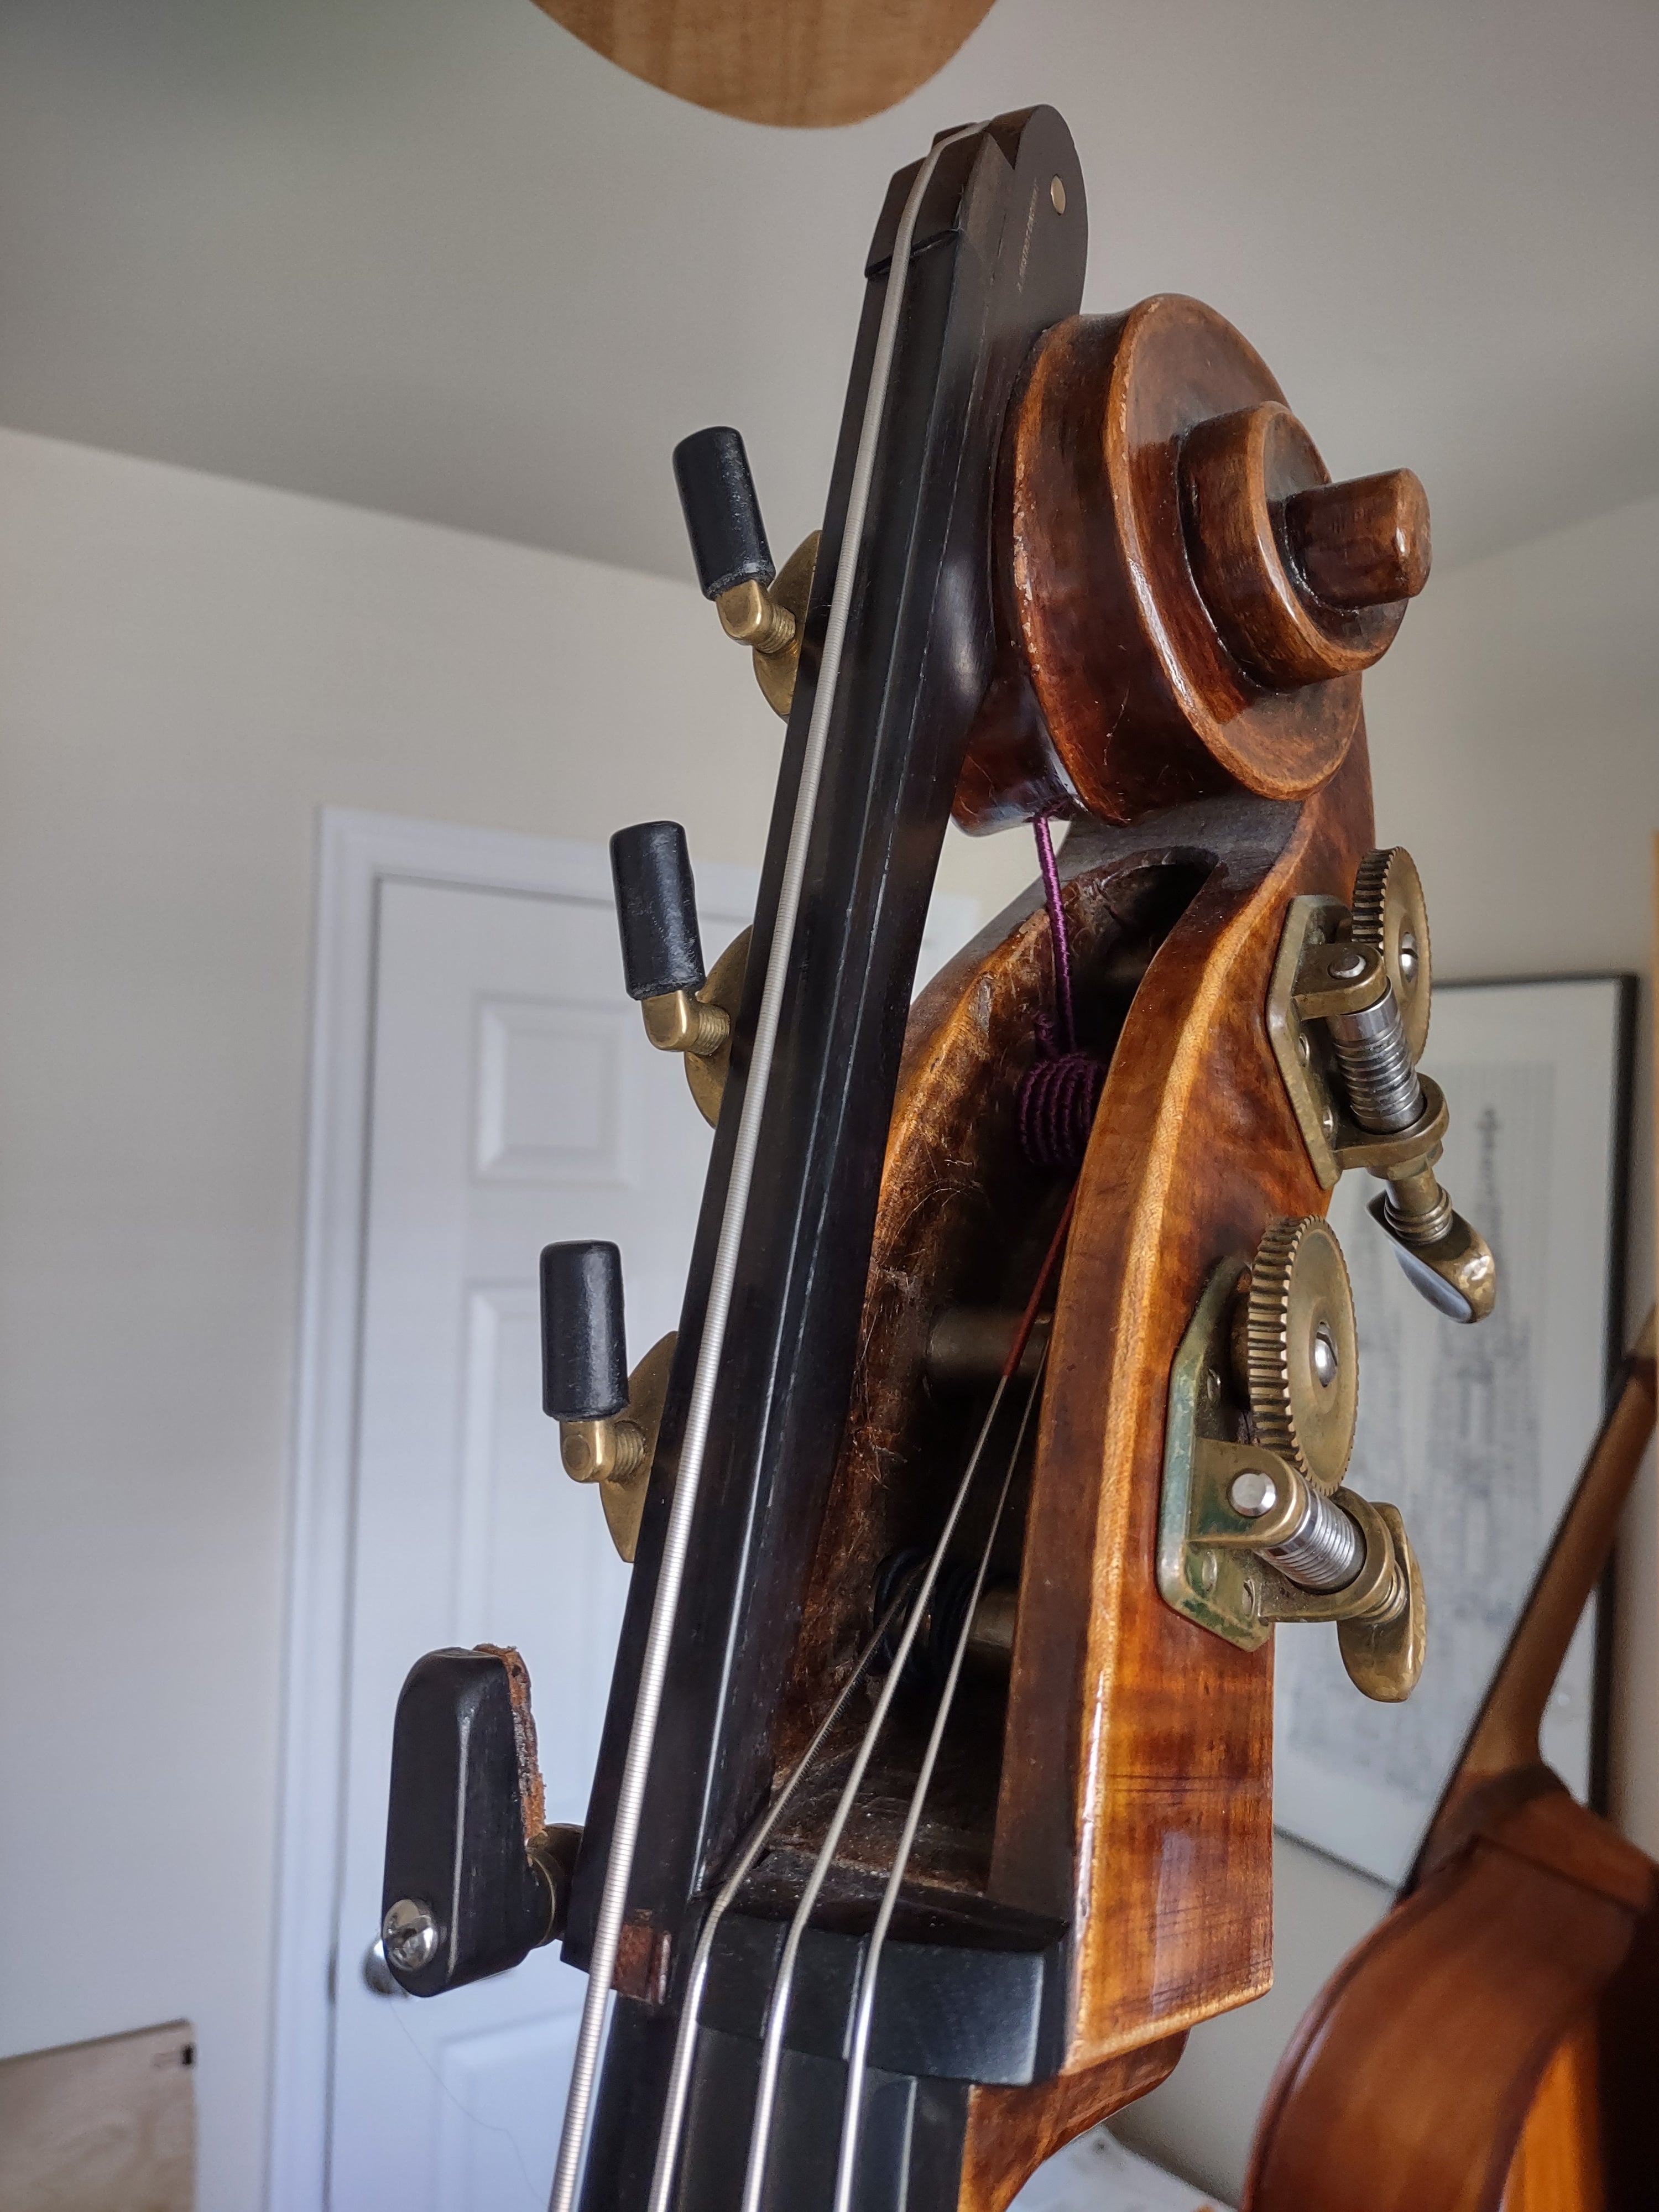 The extension on Robert Oppelt's bass